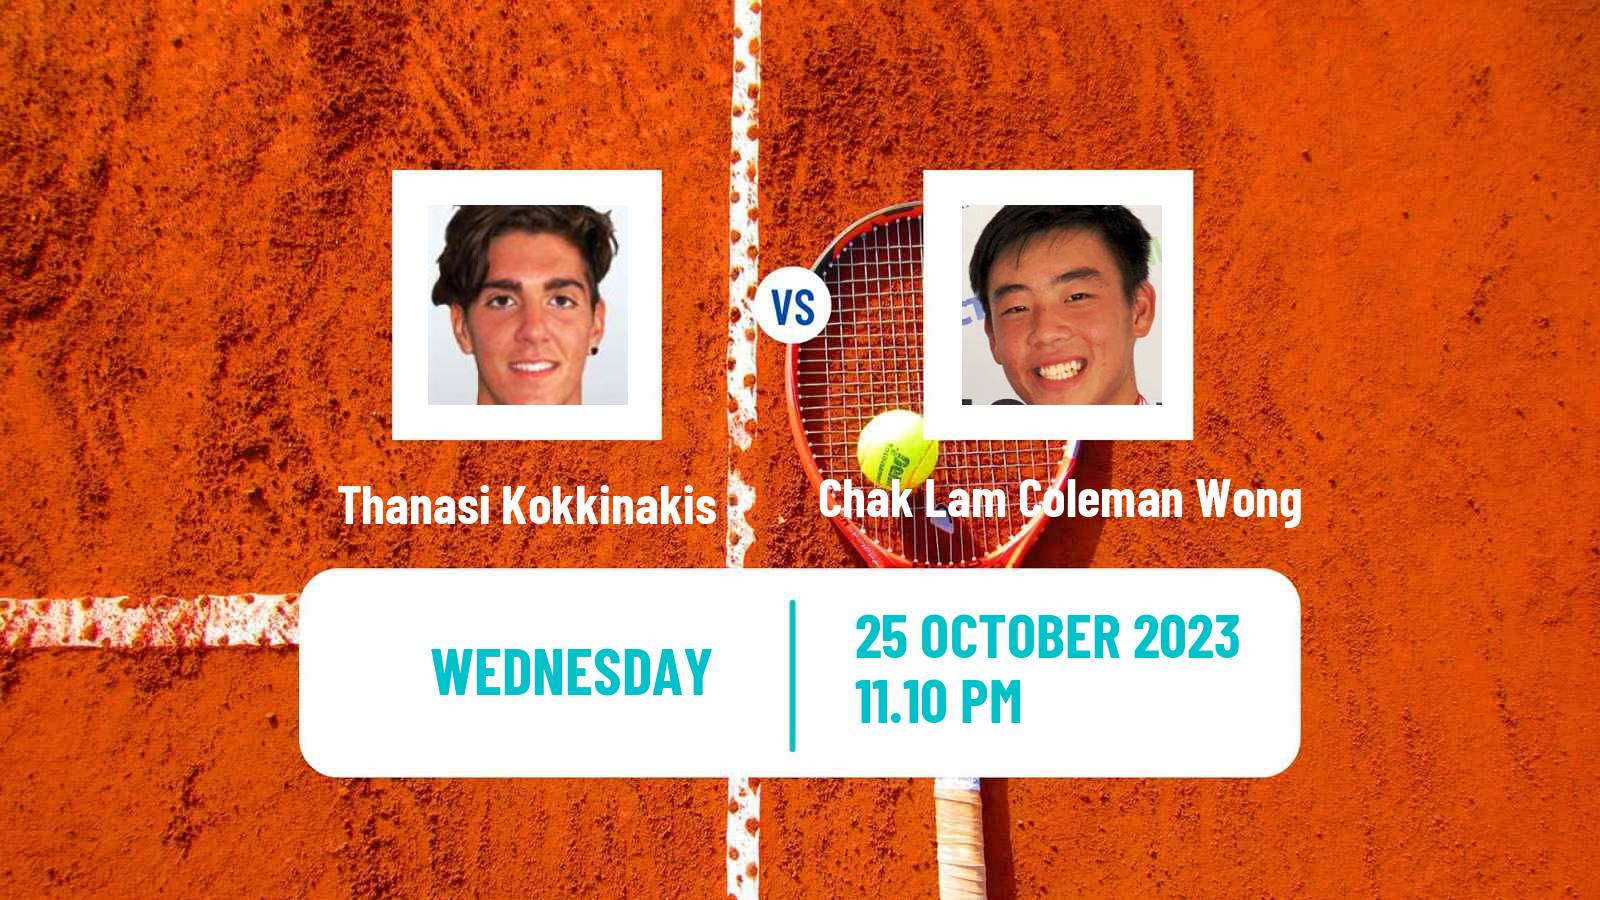 Tennis Playford 2 Challenger Men Thanasi Kokkinakis - Chak Lam Coleman Wong